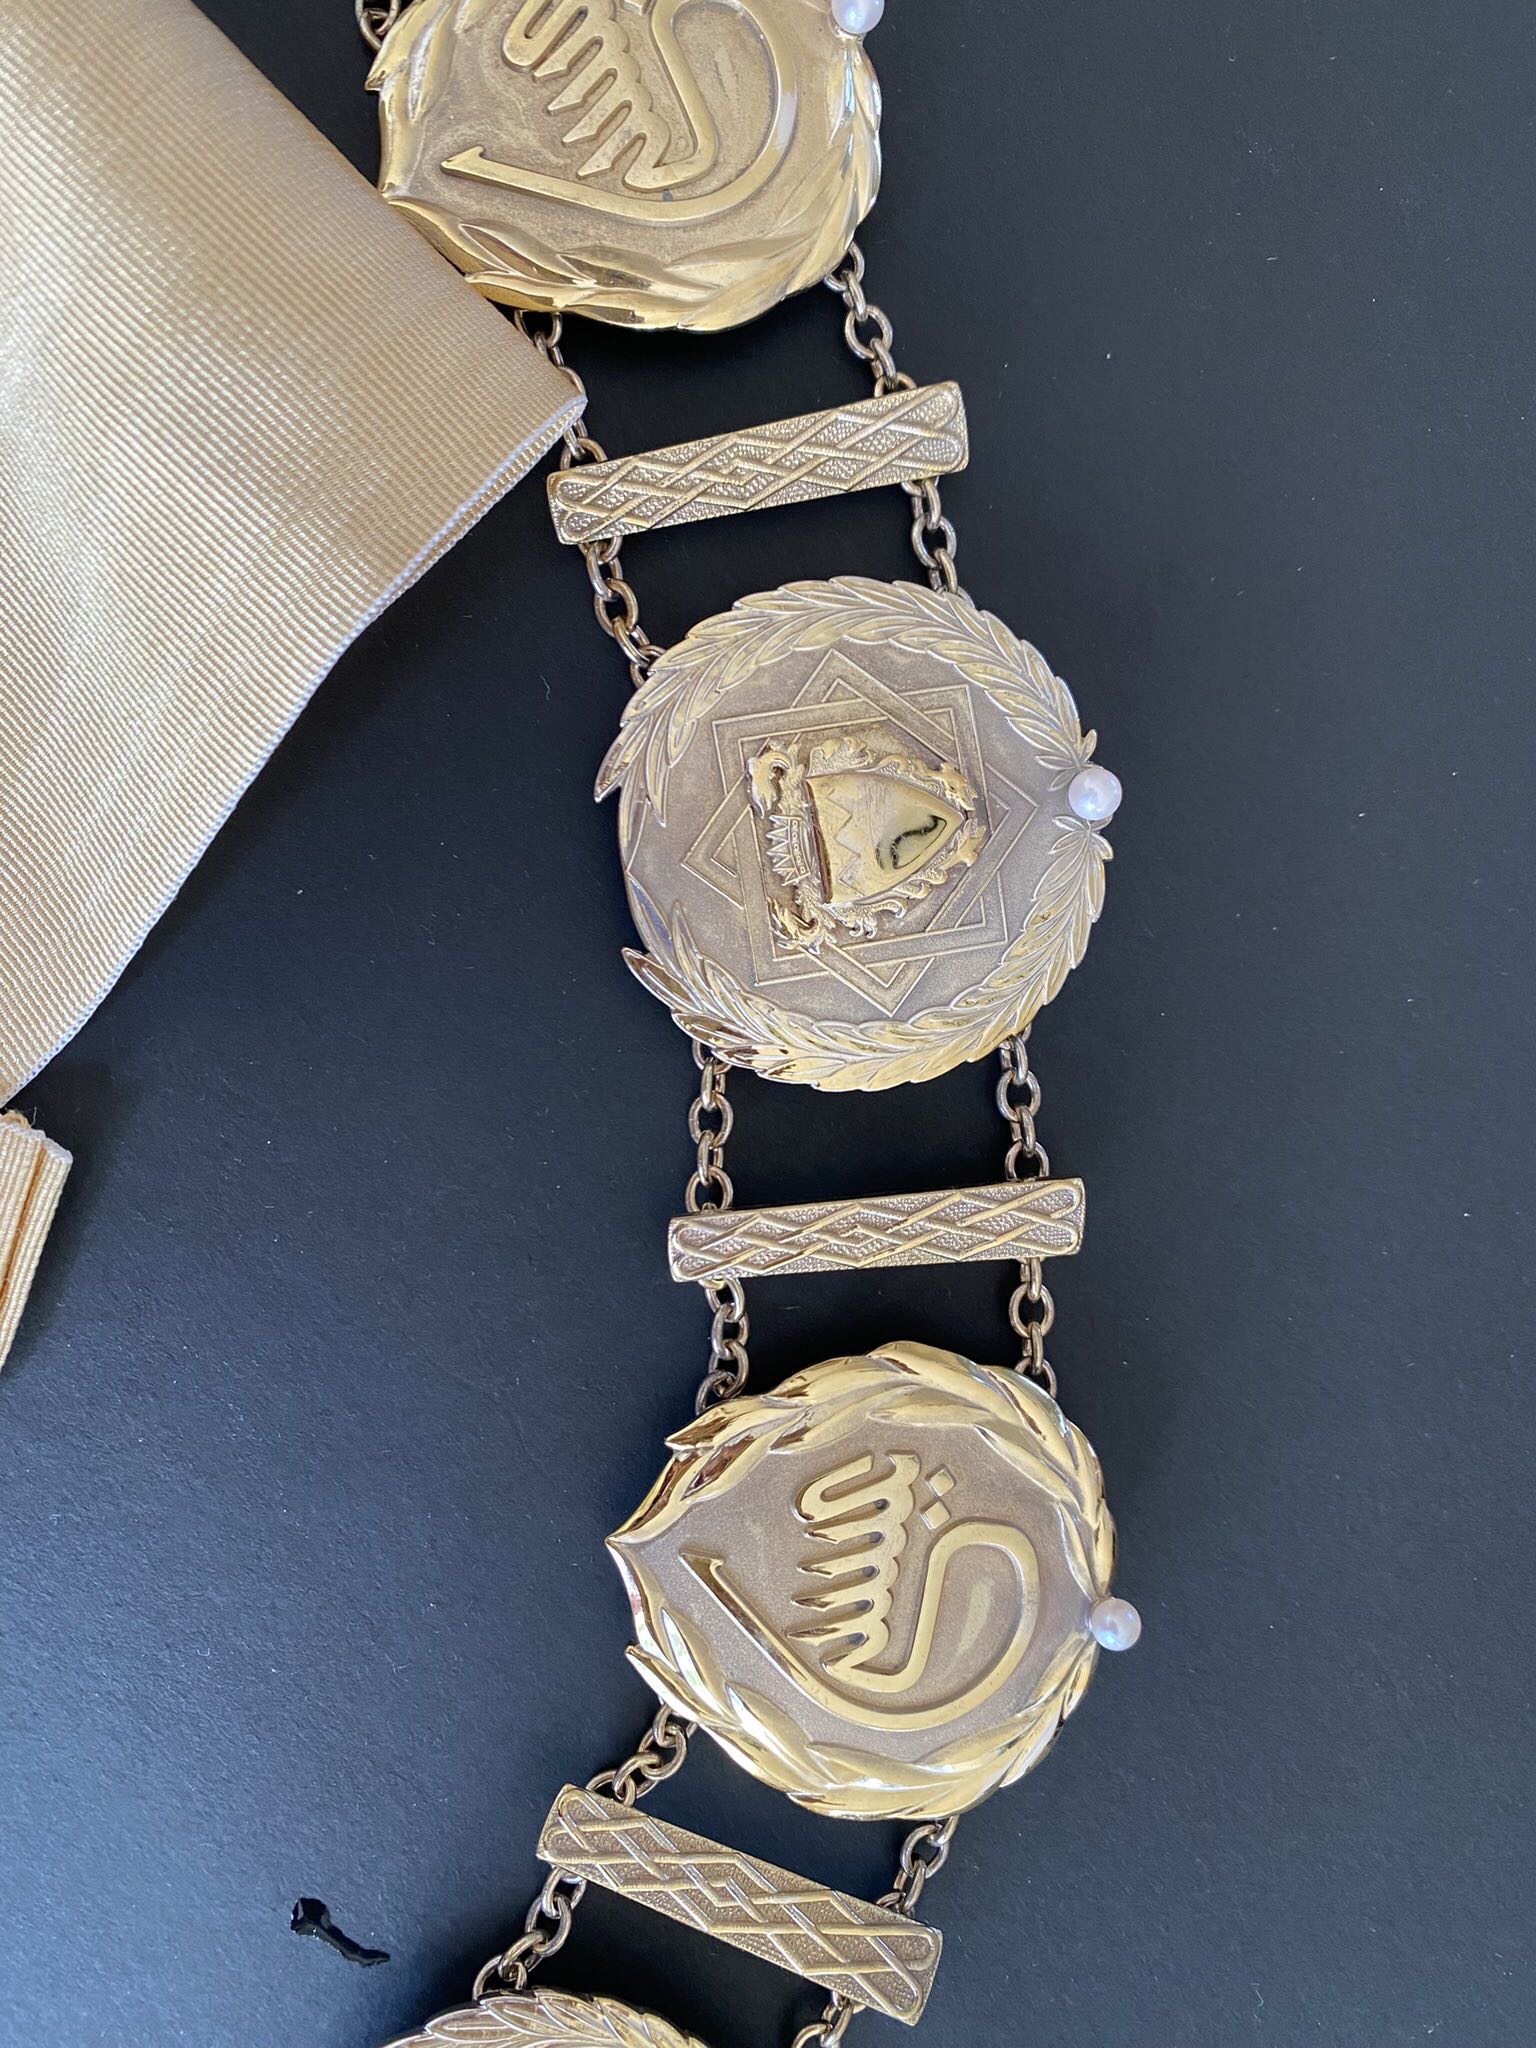 Kingdom of Bahrain Order Of Sheikh Issa Ibn Salman Al Khalifa   Collar & Badge Exceptional  Presidential Gift  مملكة البحرين  قلادة الشيخ عيسى بن سلمان ال خليفة  هدية ملكية